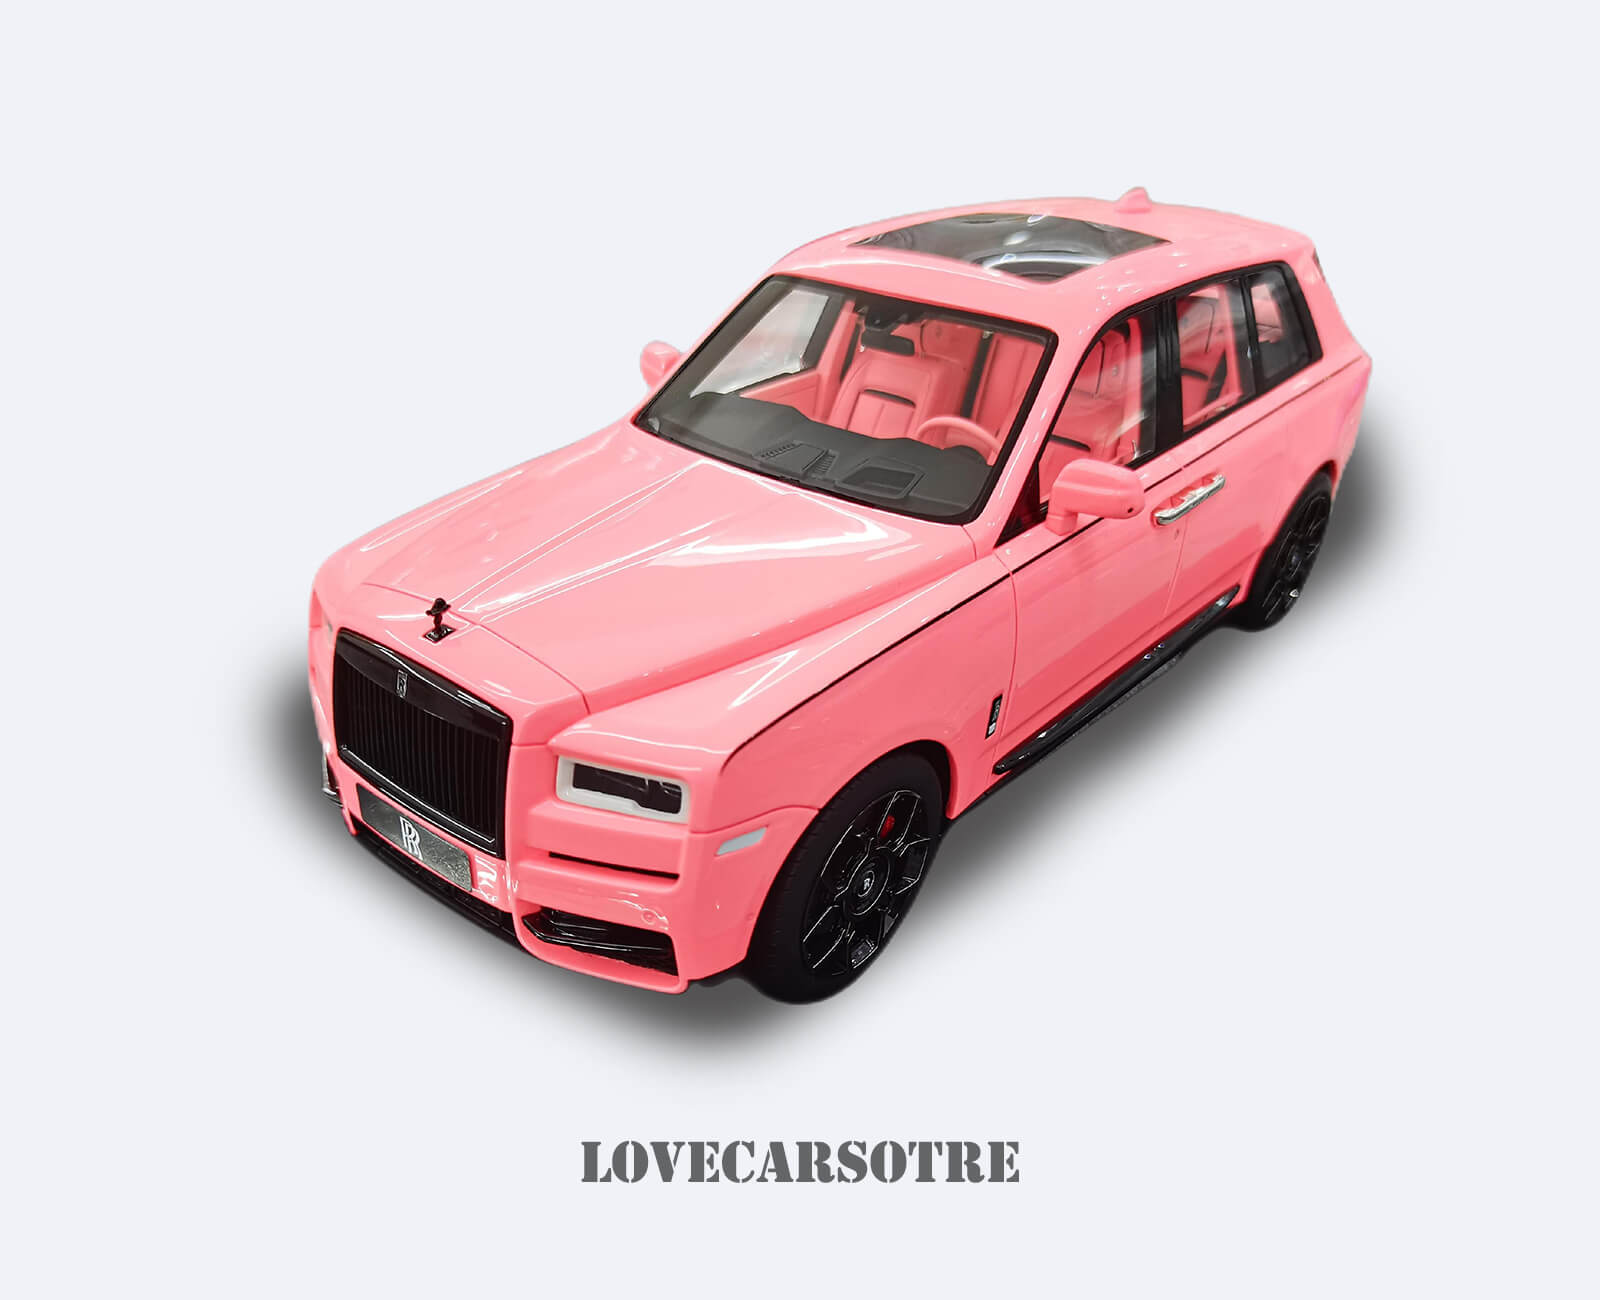 2022 Rolls-Royce Cullinan featuring a custom factory pink interior!, Price:  $699,998 - - - - #rollsroyce #cullinan #supercar #hypercar…